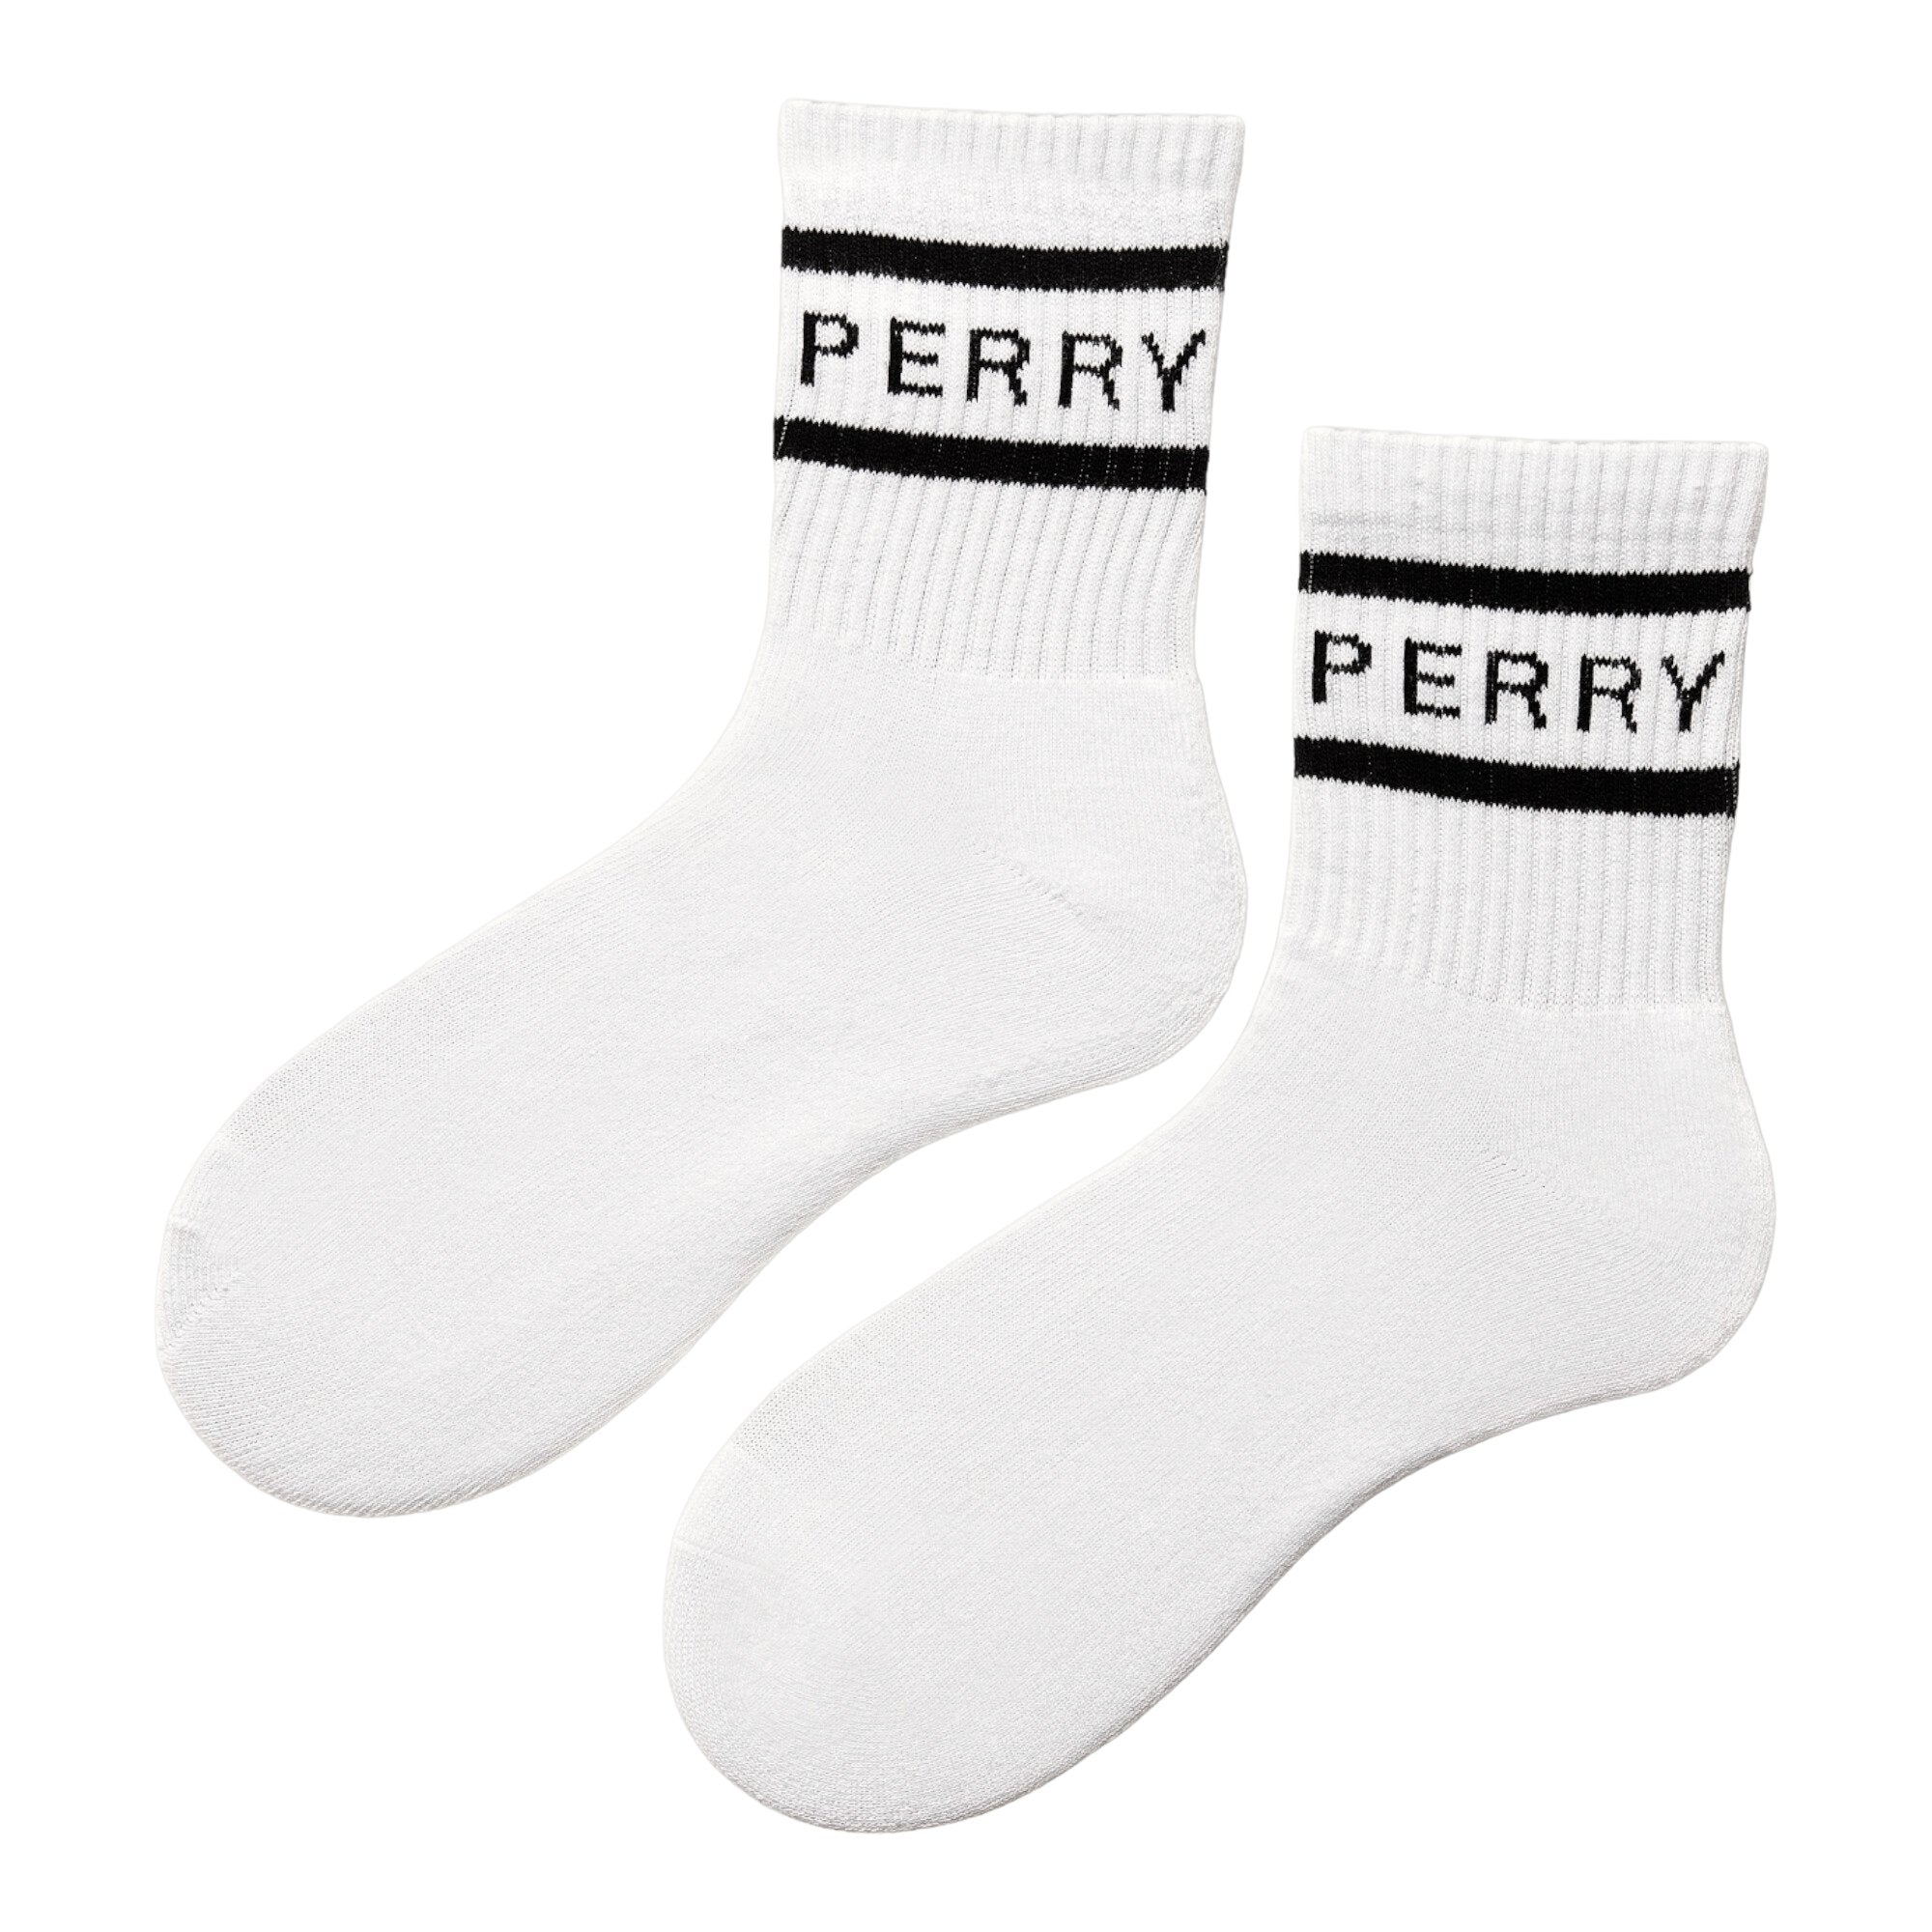 Stretch Fit Crew Socks - SAINT PERRY